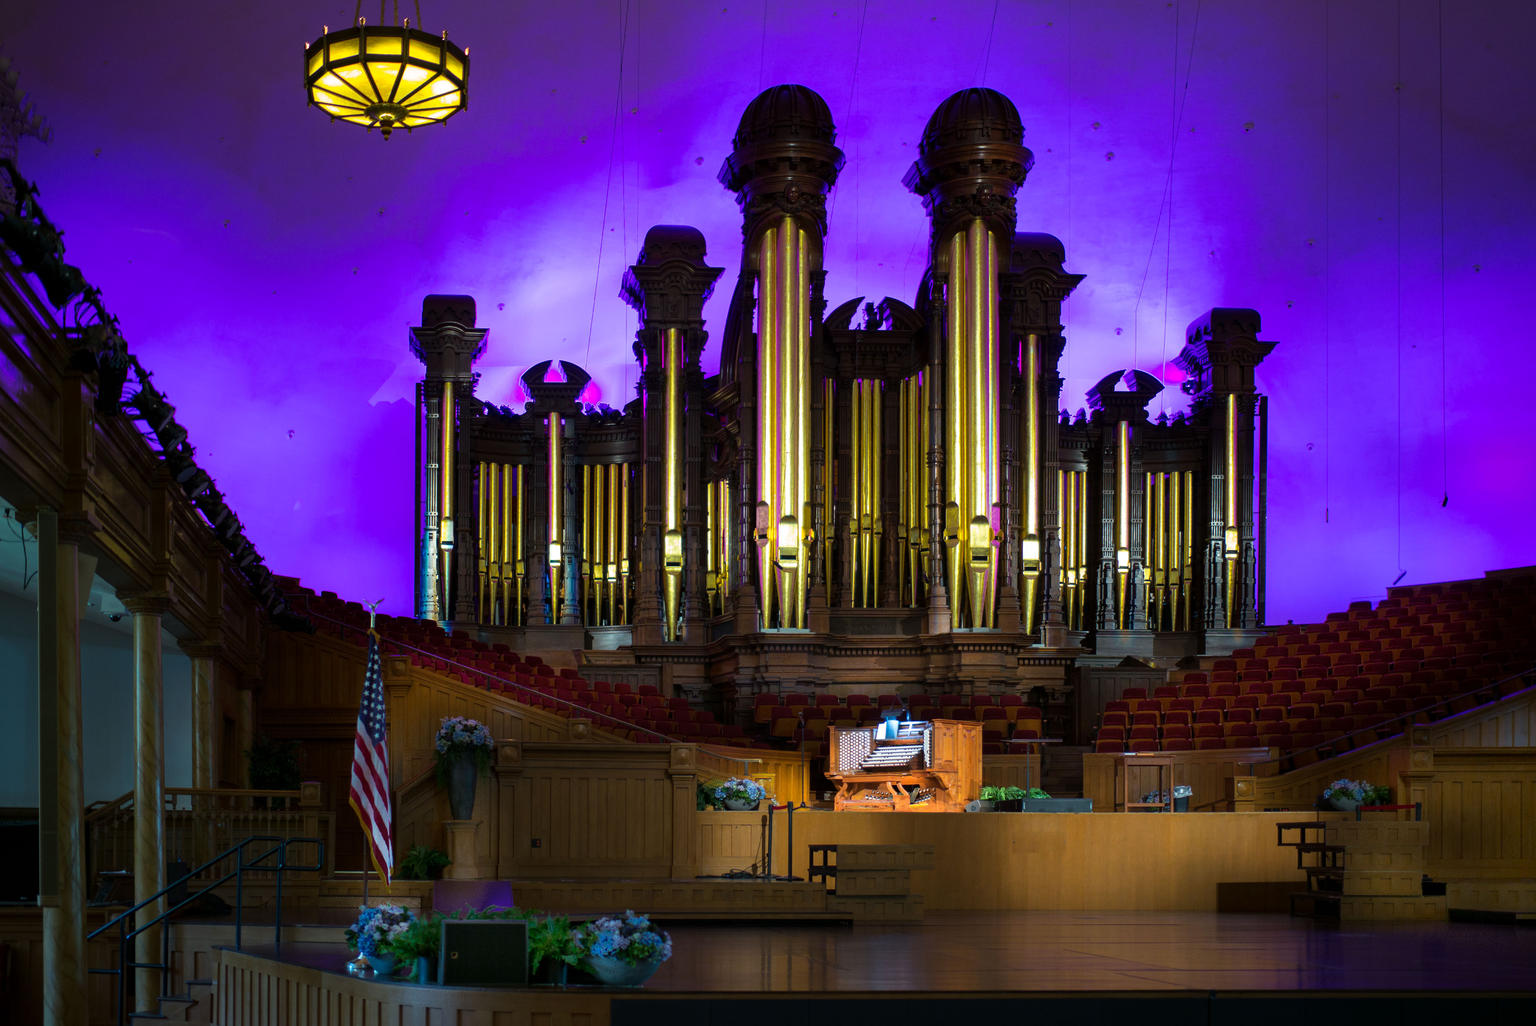 Salt Lake City Tabernacle Organ